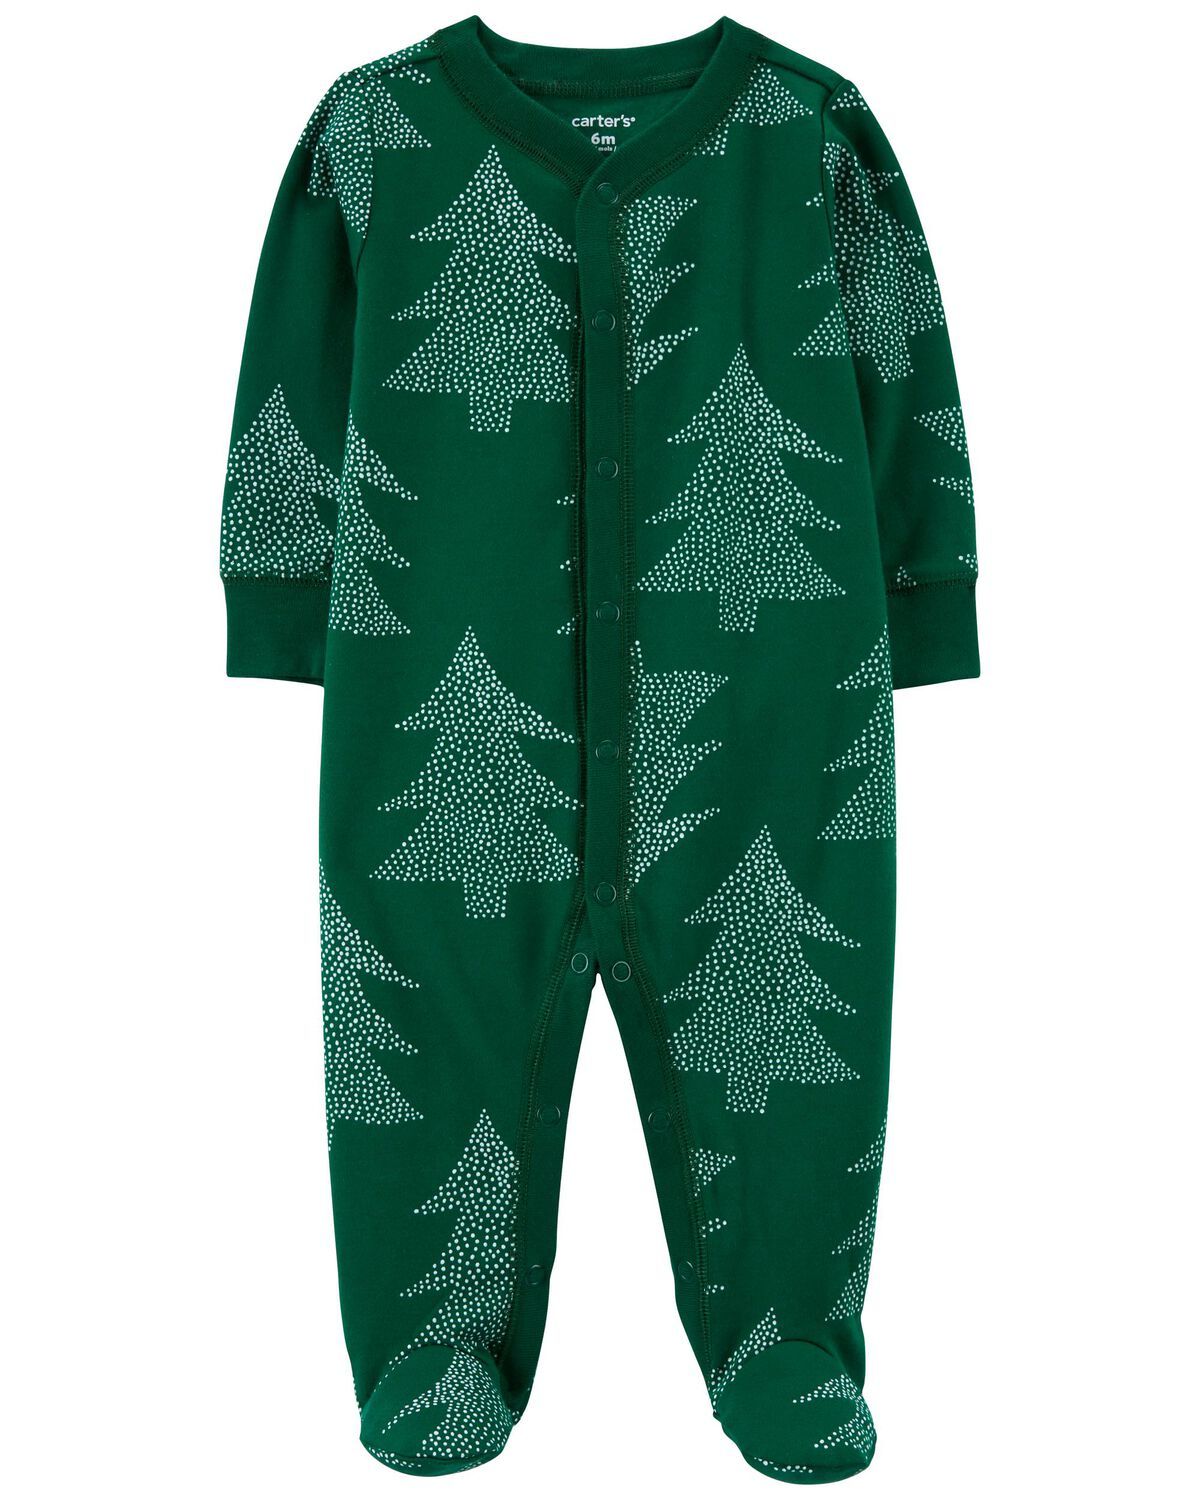 Green Baby Christmas Tree Snap-Up Cotton Sleep & Play Pajamas | carters.com | Carter's